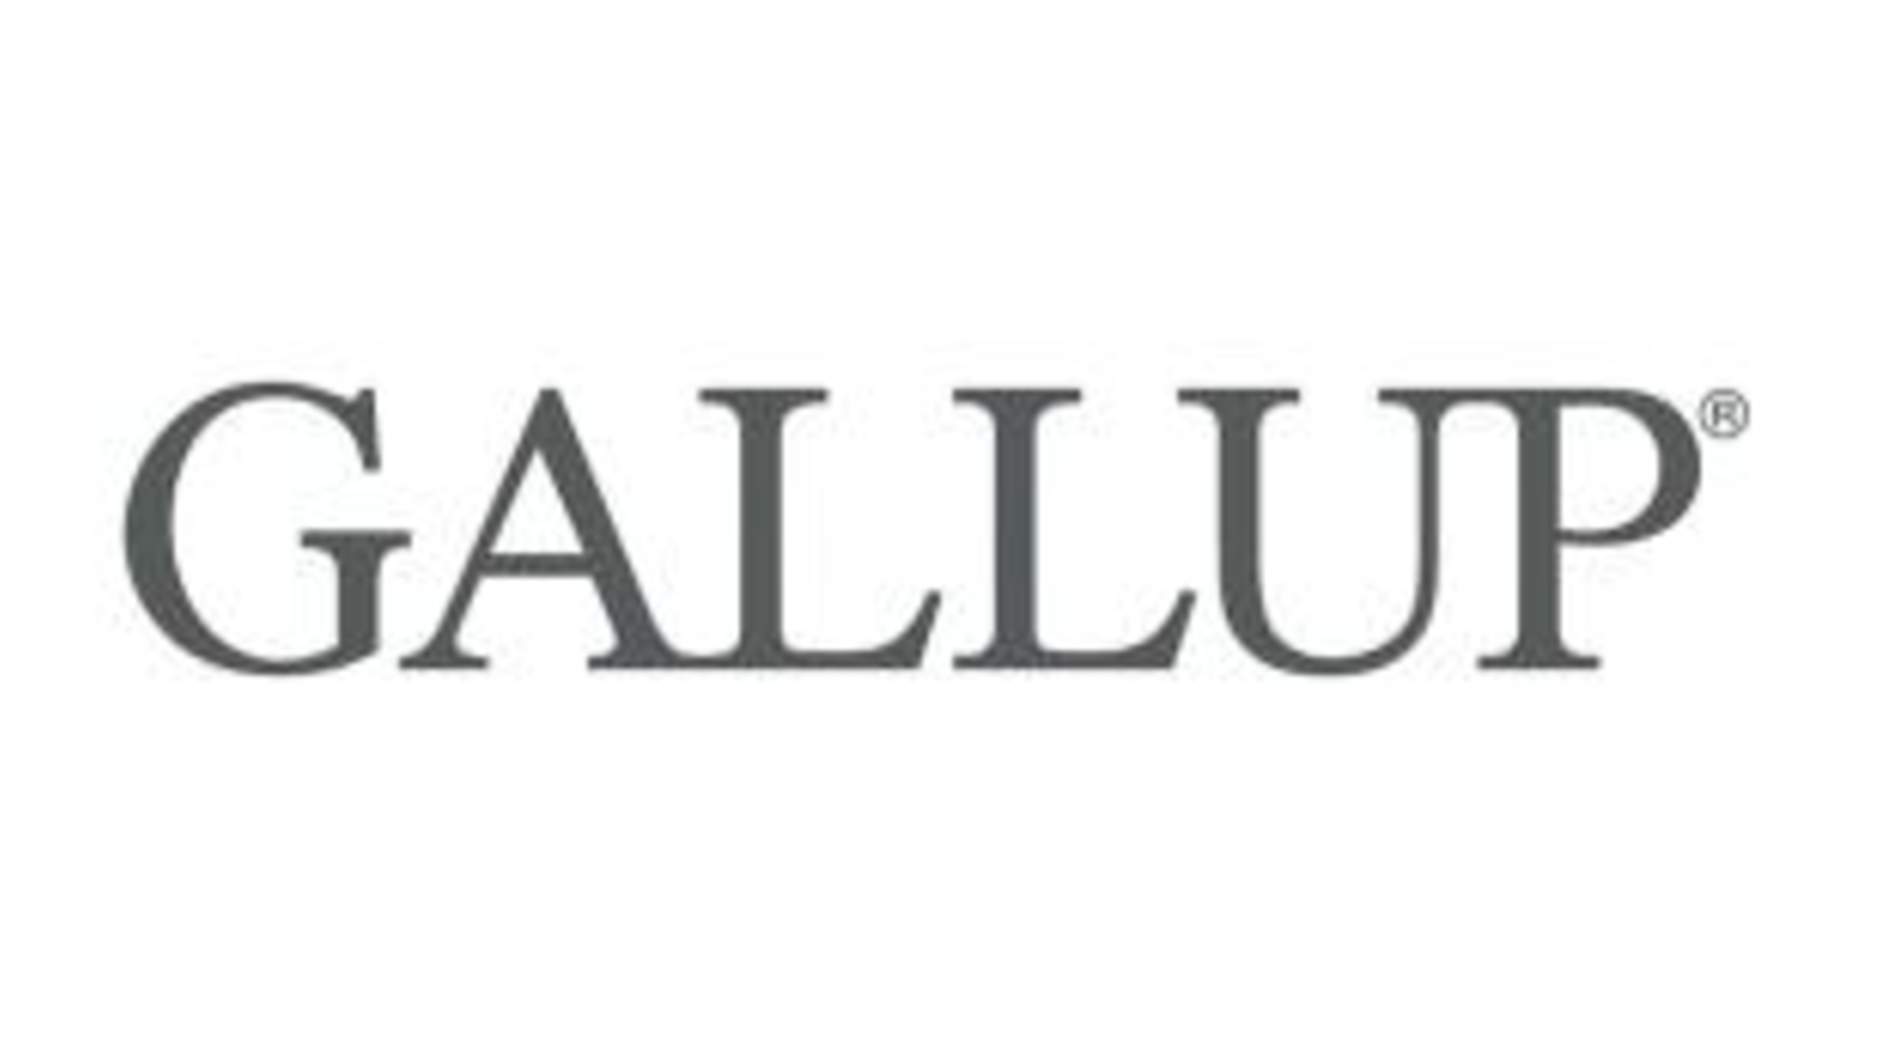 gallup logo